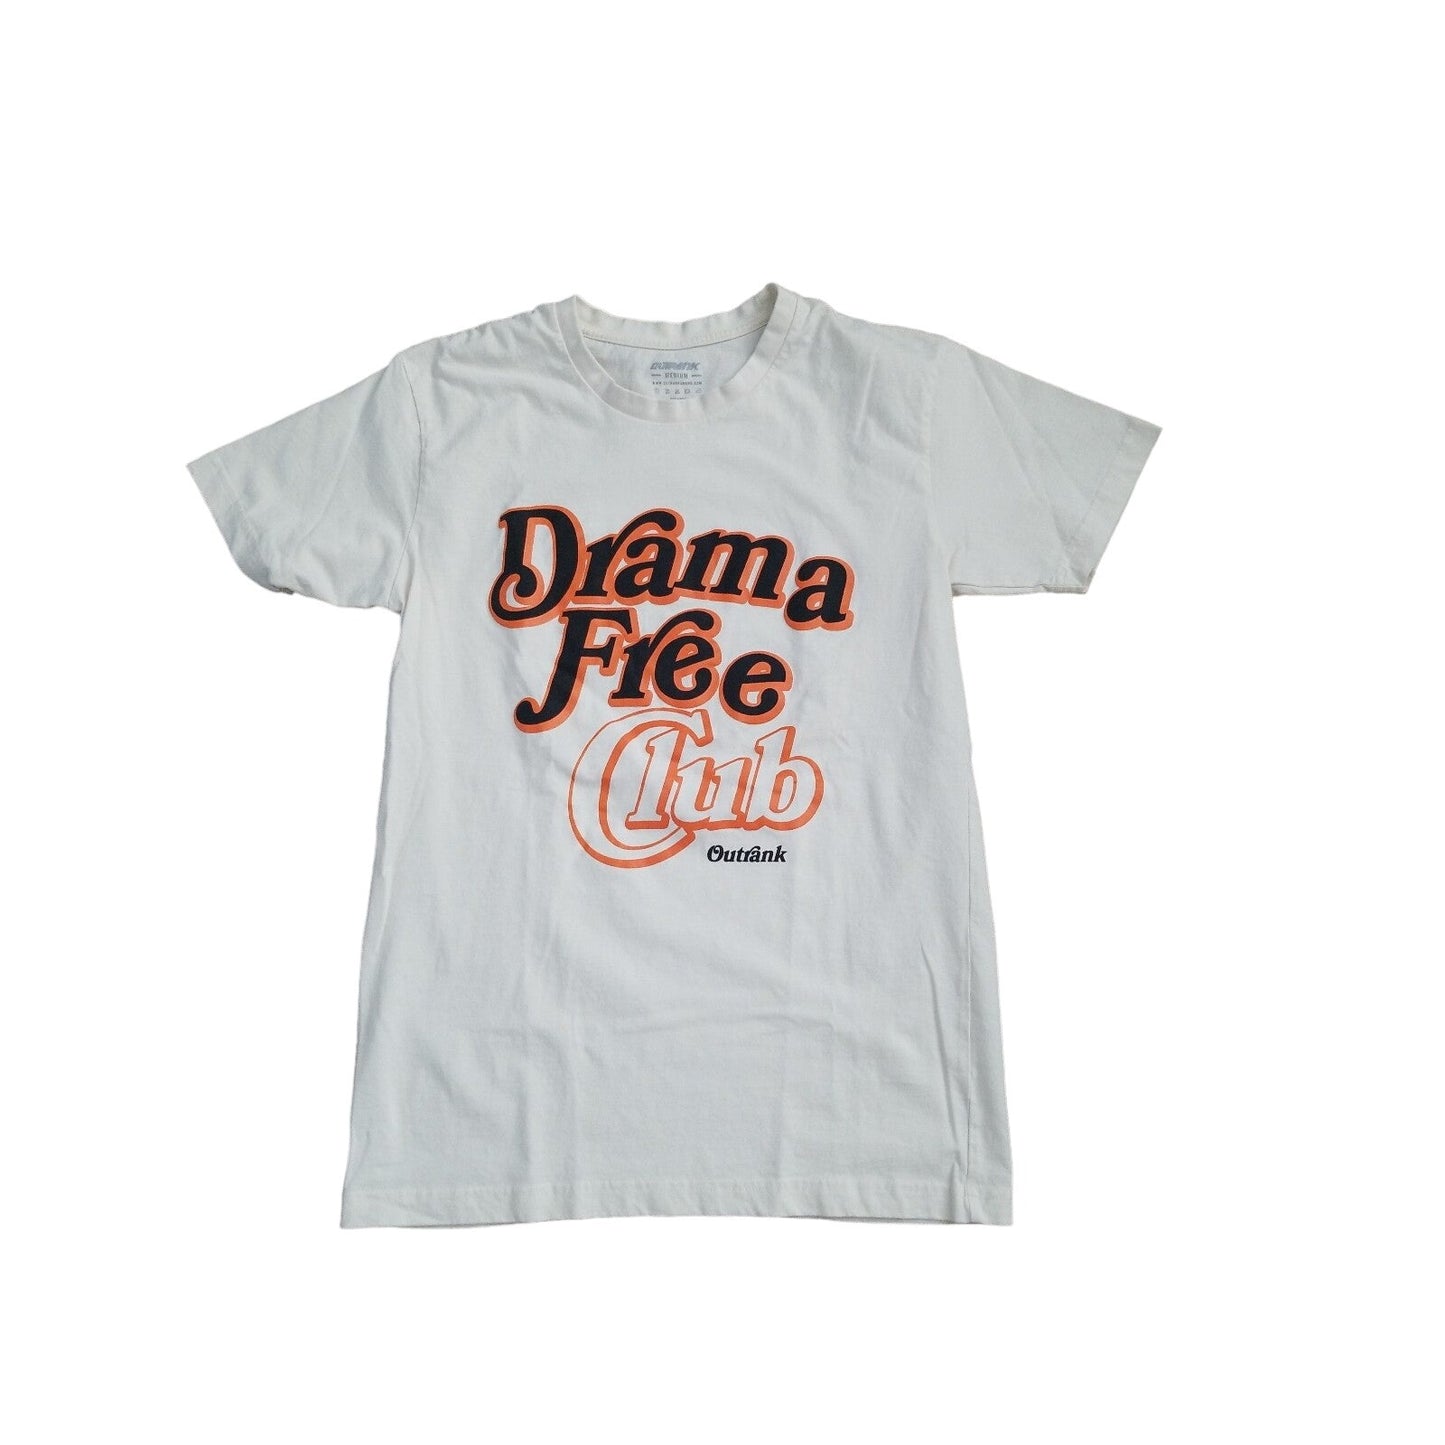 Outrank Brand T-Shirt